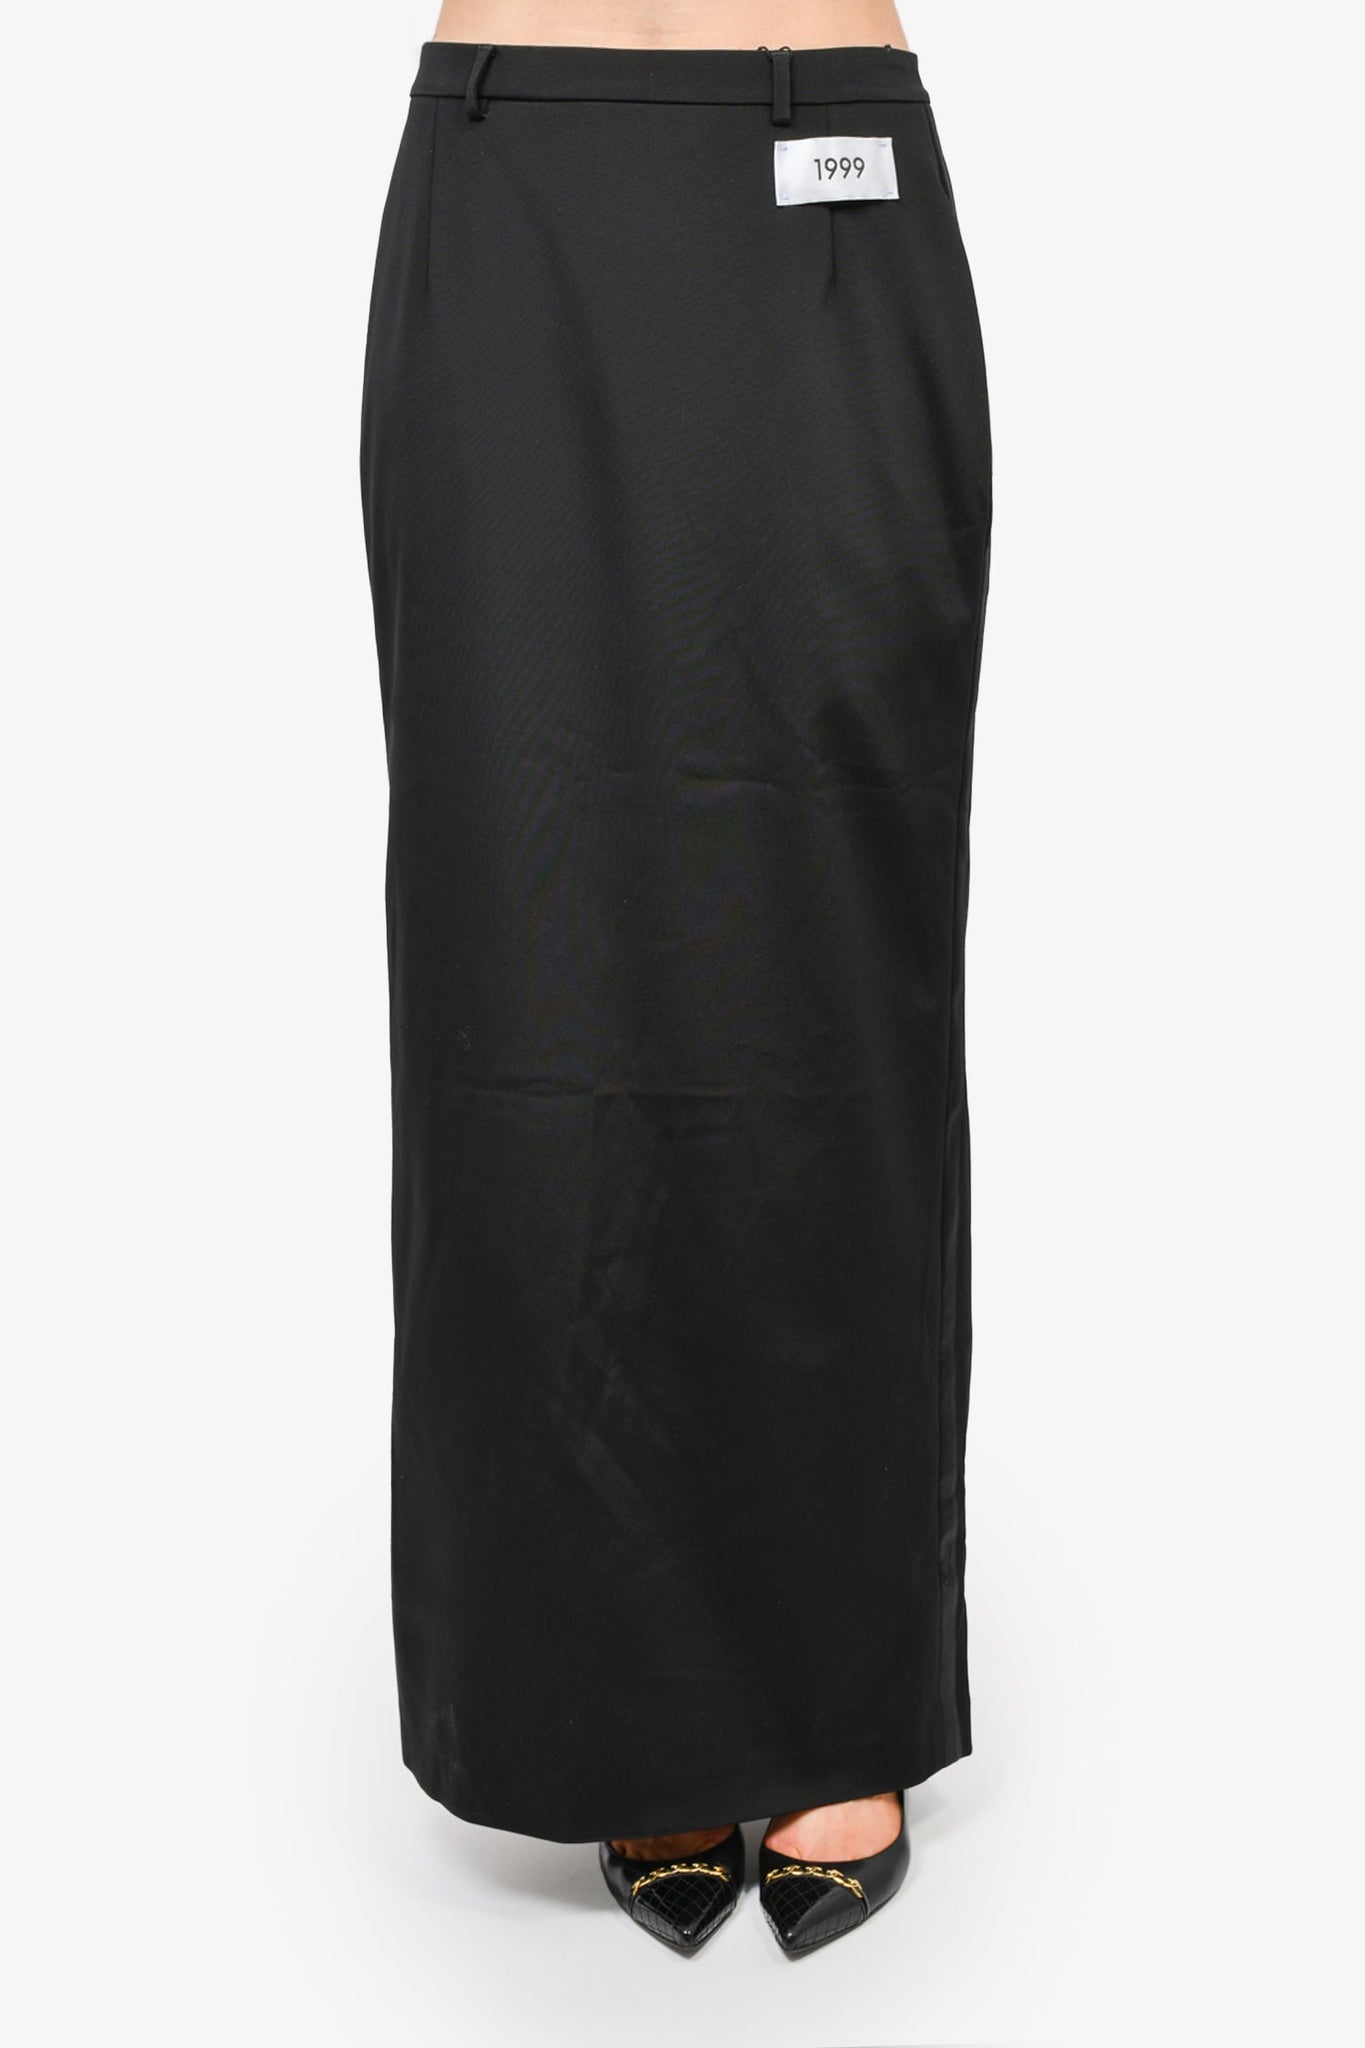 Dolce & Gabbana Black '1999' Maxi Skirt sz 46 w/ Tags